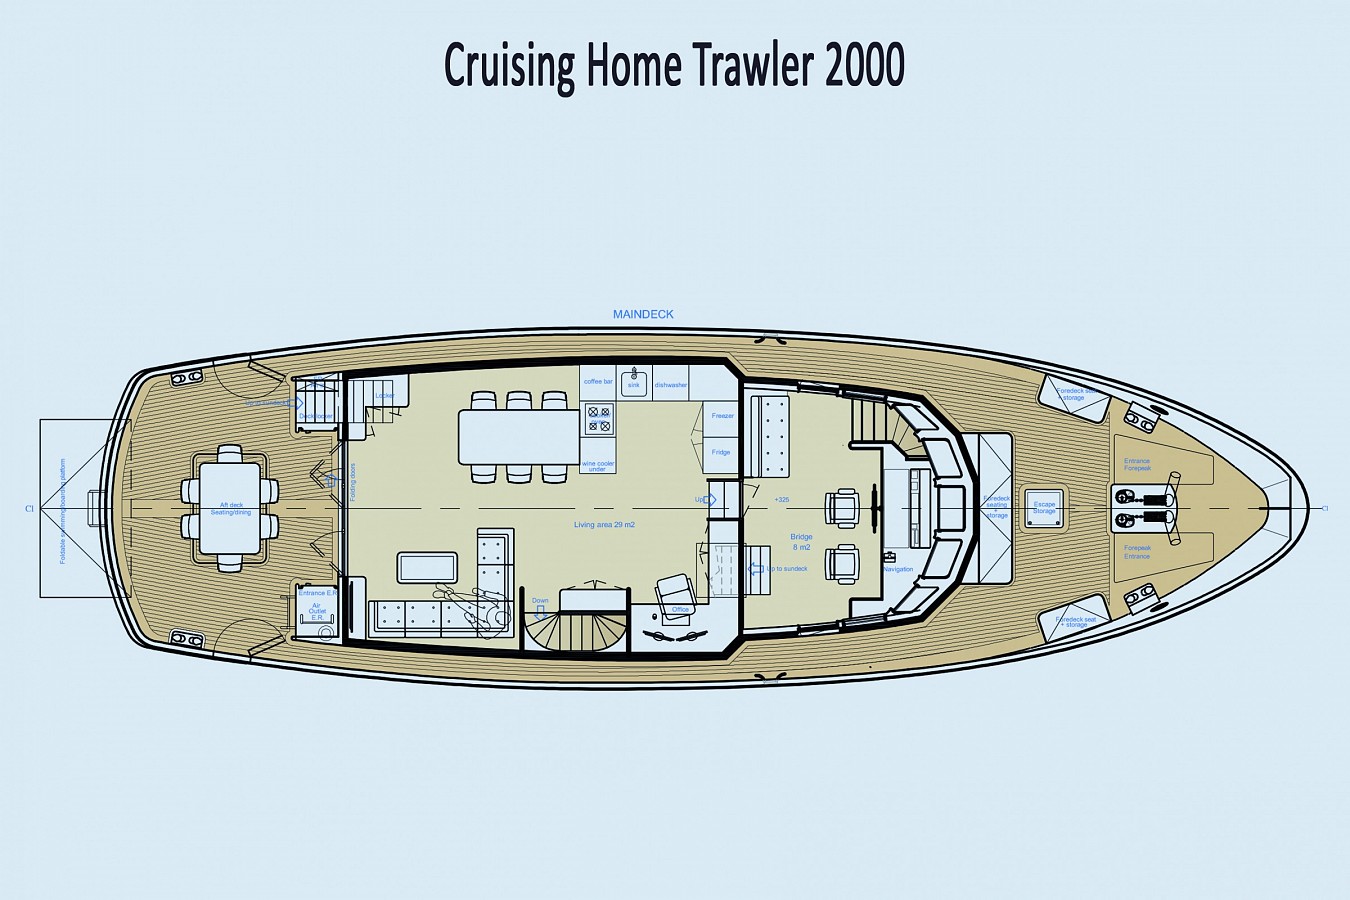 Cruising Home Trawler 2000